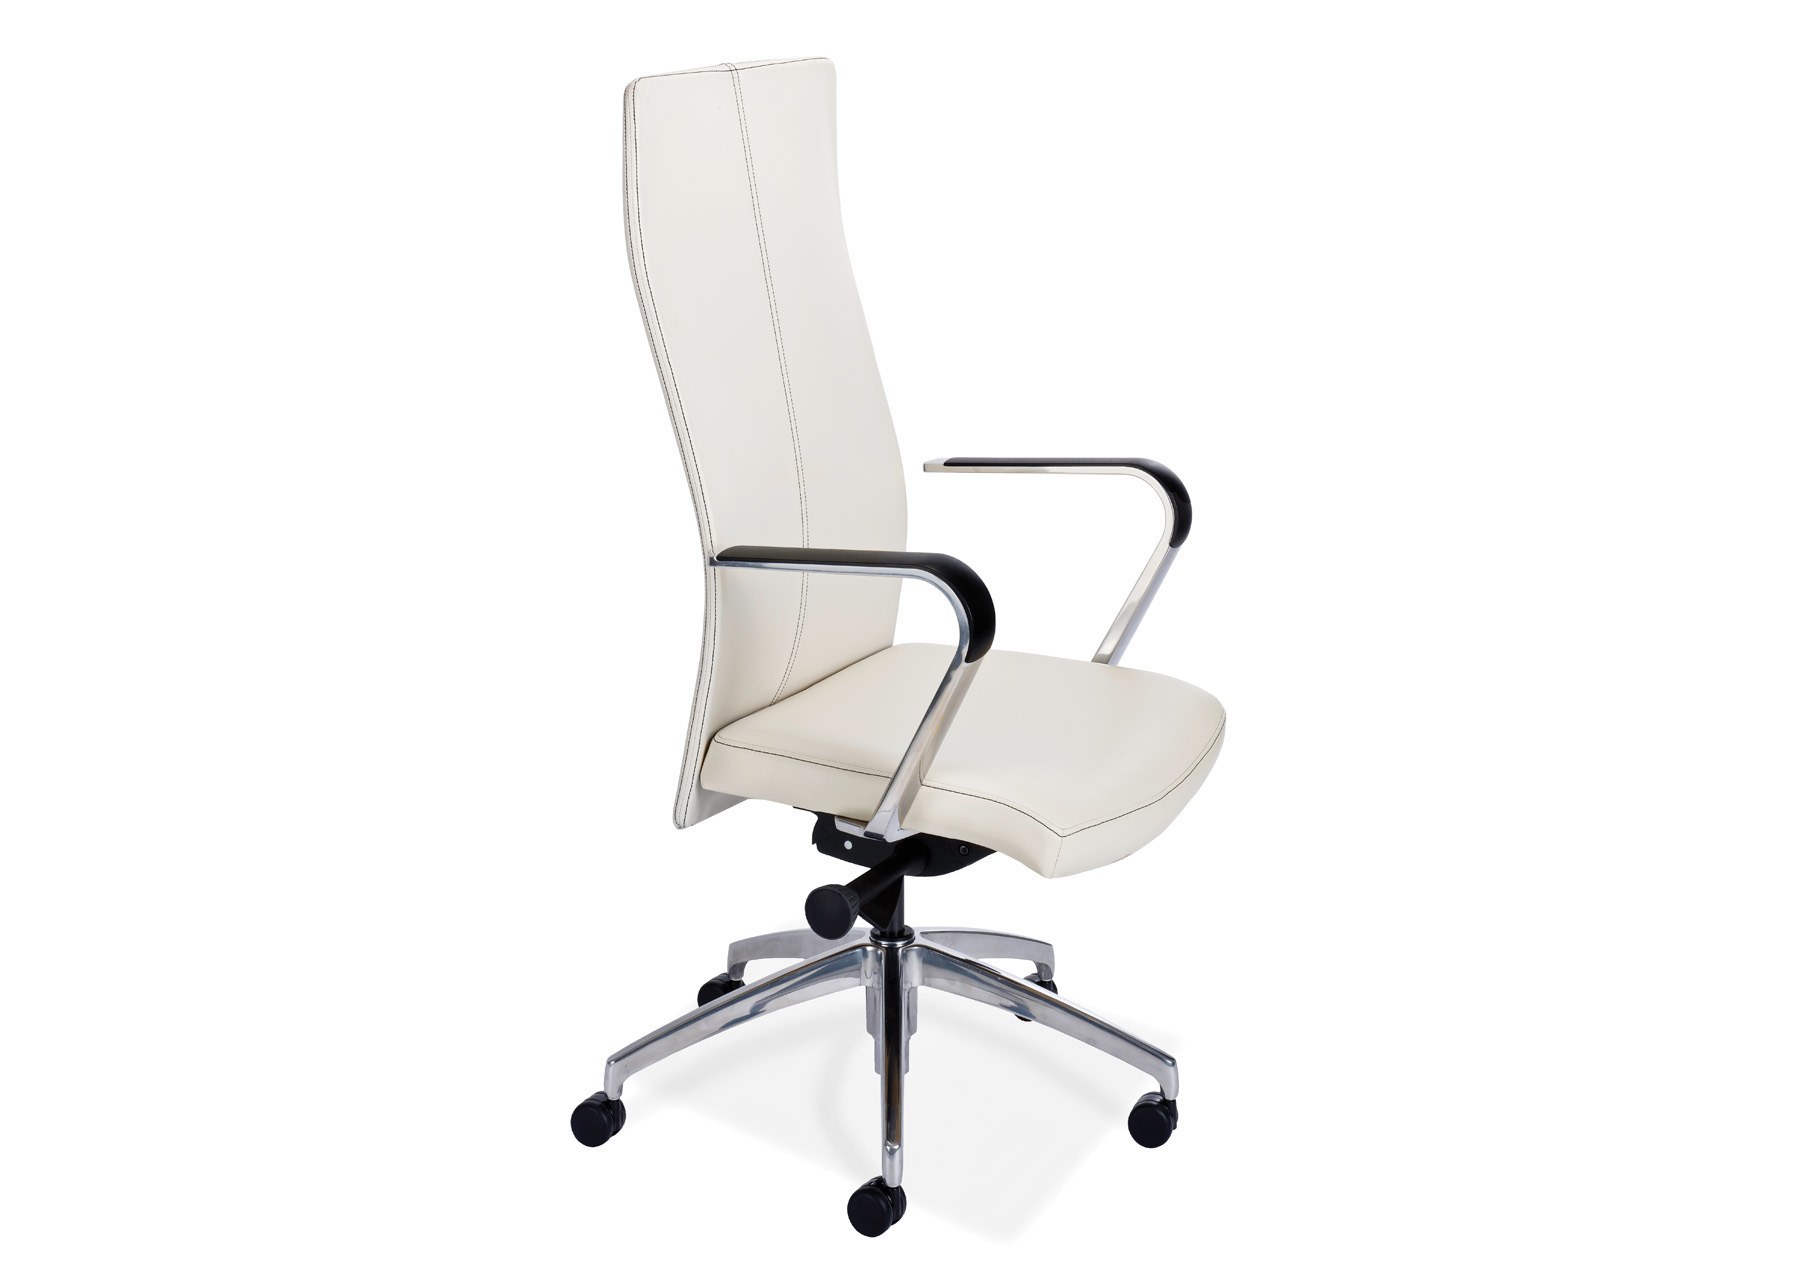 Cabot Wrenn Sleek Swivel Chair